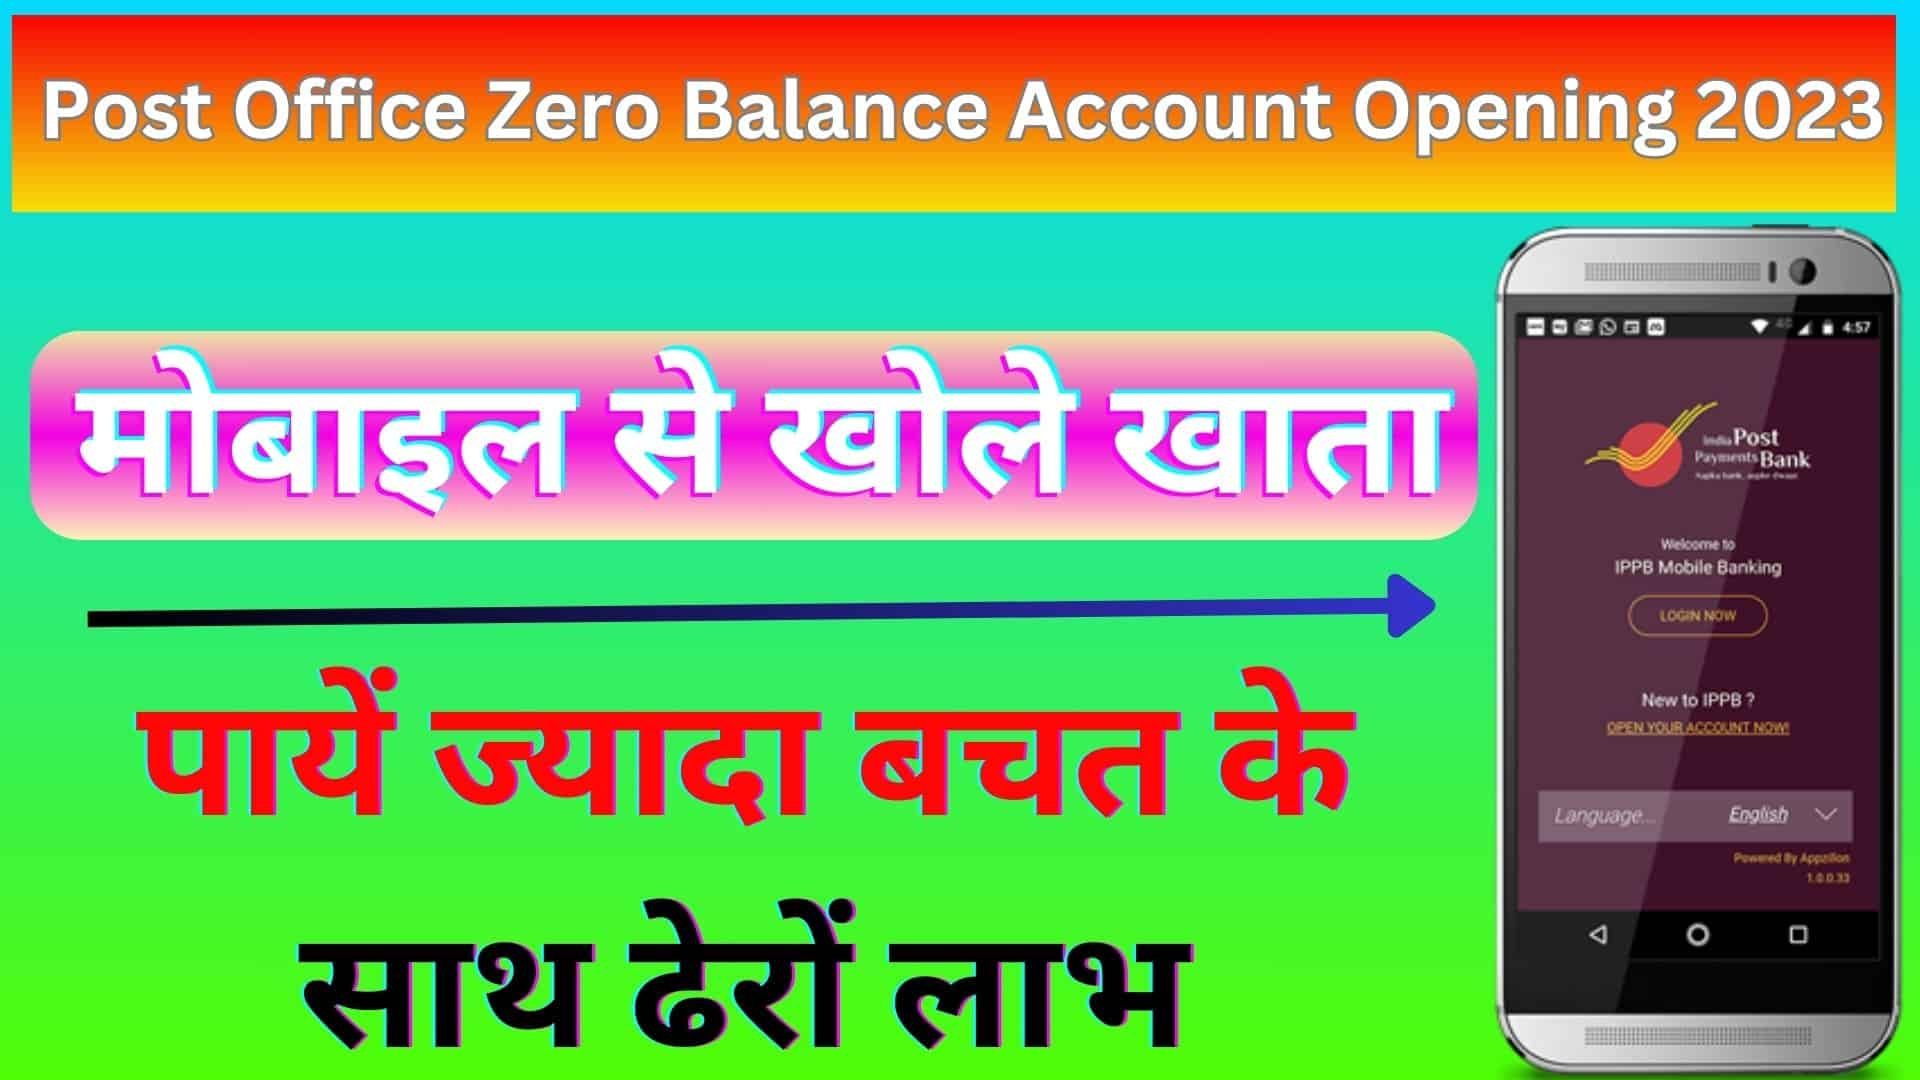 Post Office Zero Balance Account Opening 2023 : मोबाइल से खोले खाता, पायें ज्यादा बचत के साथ ढेरों लाभ